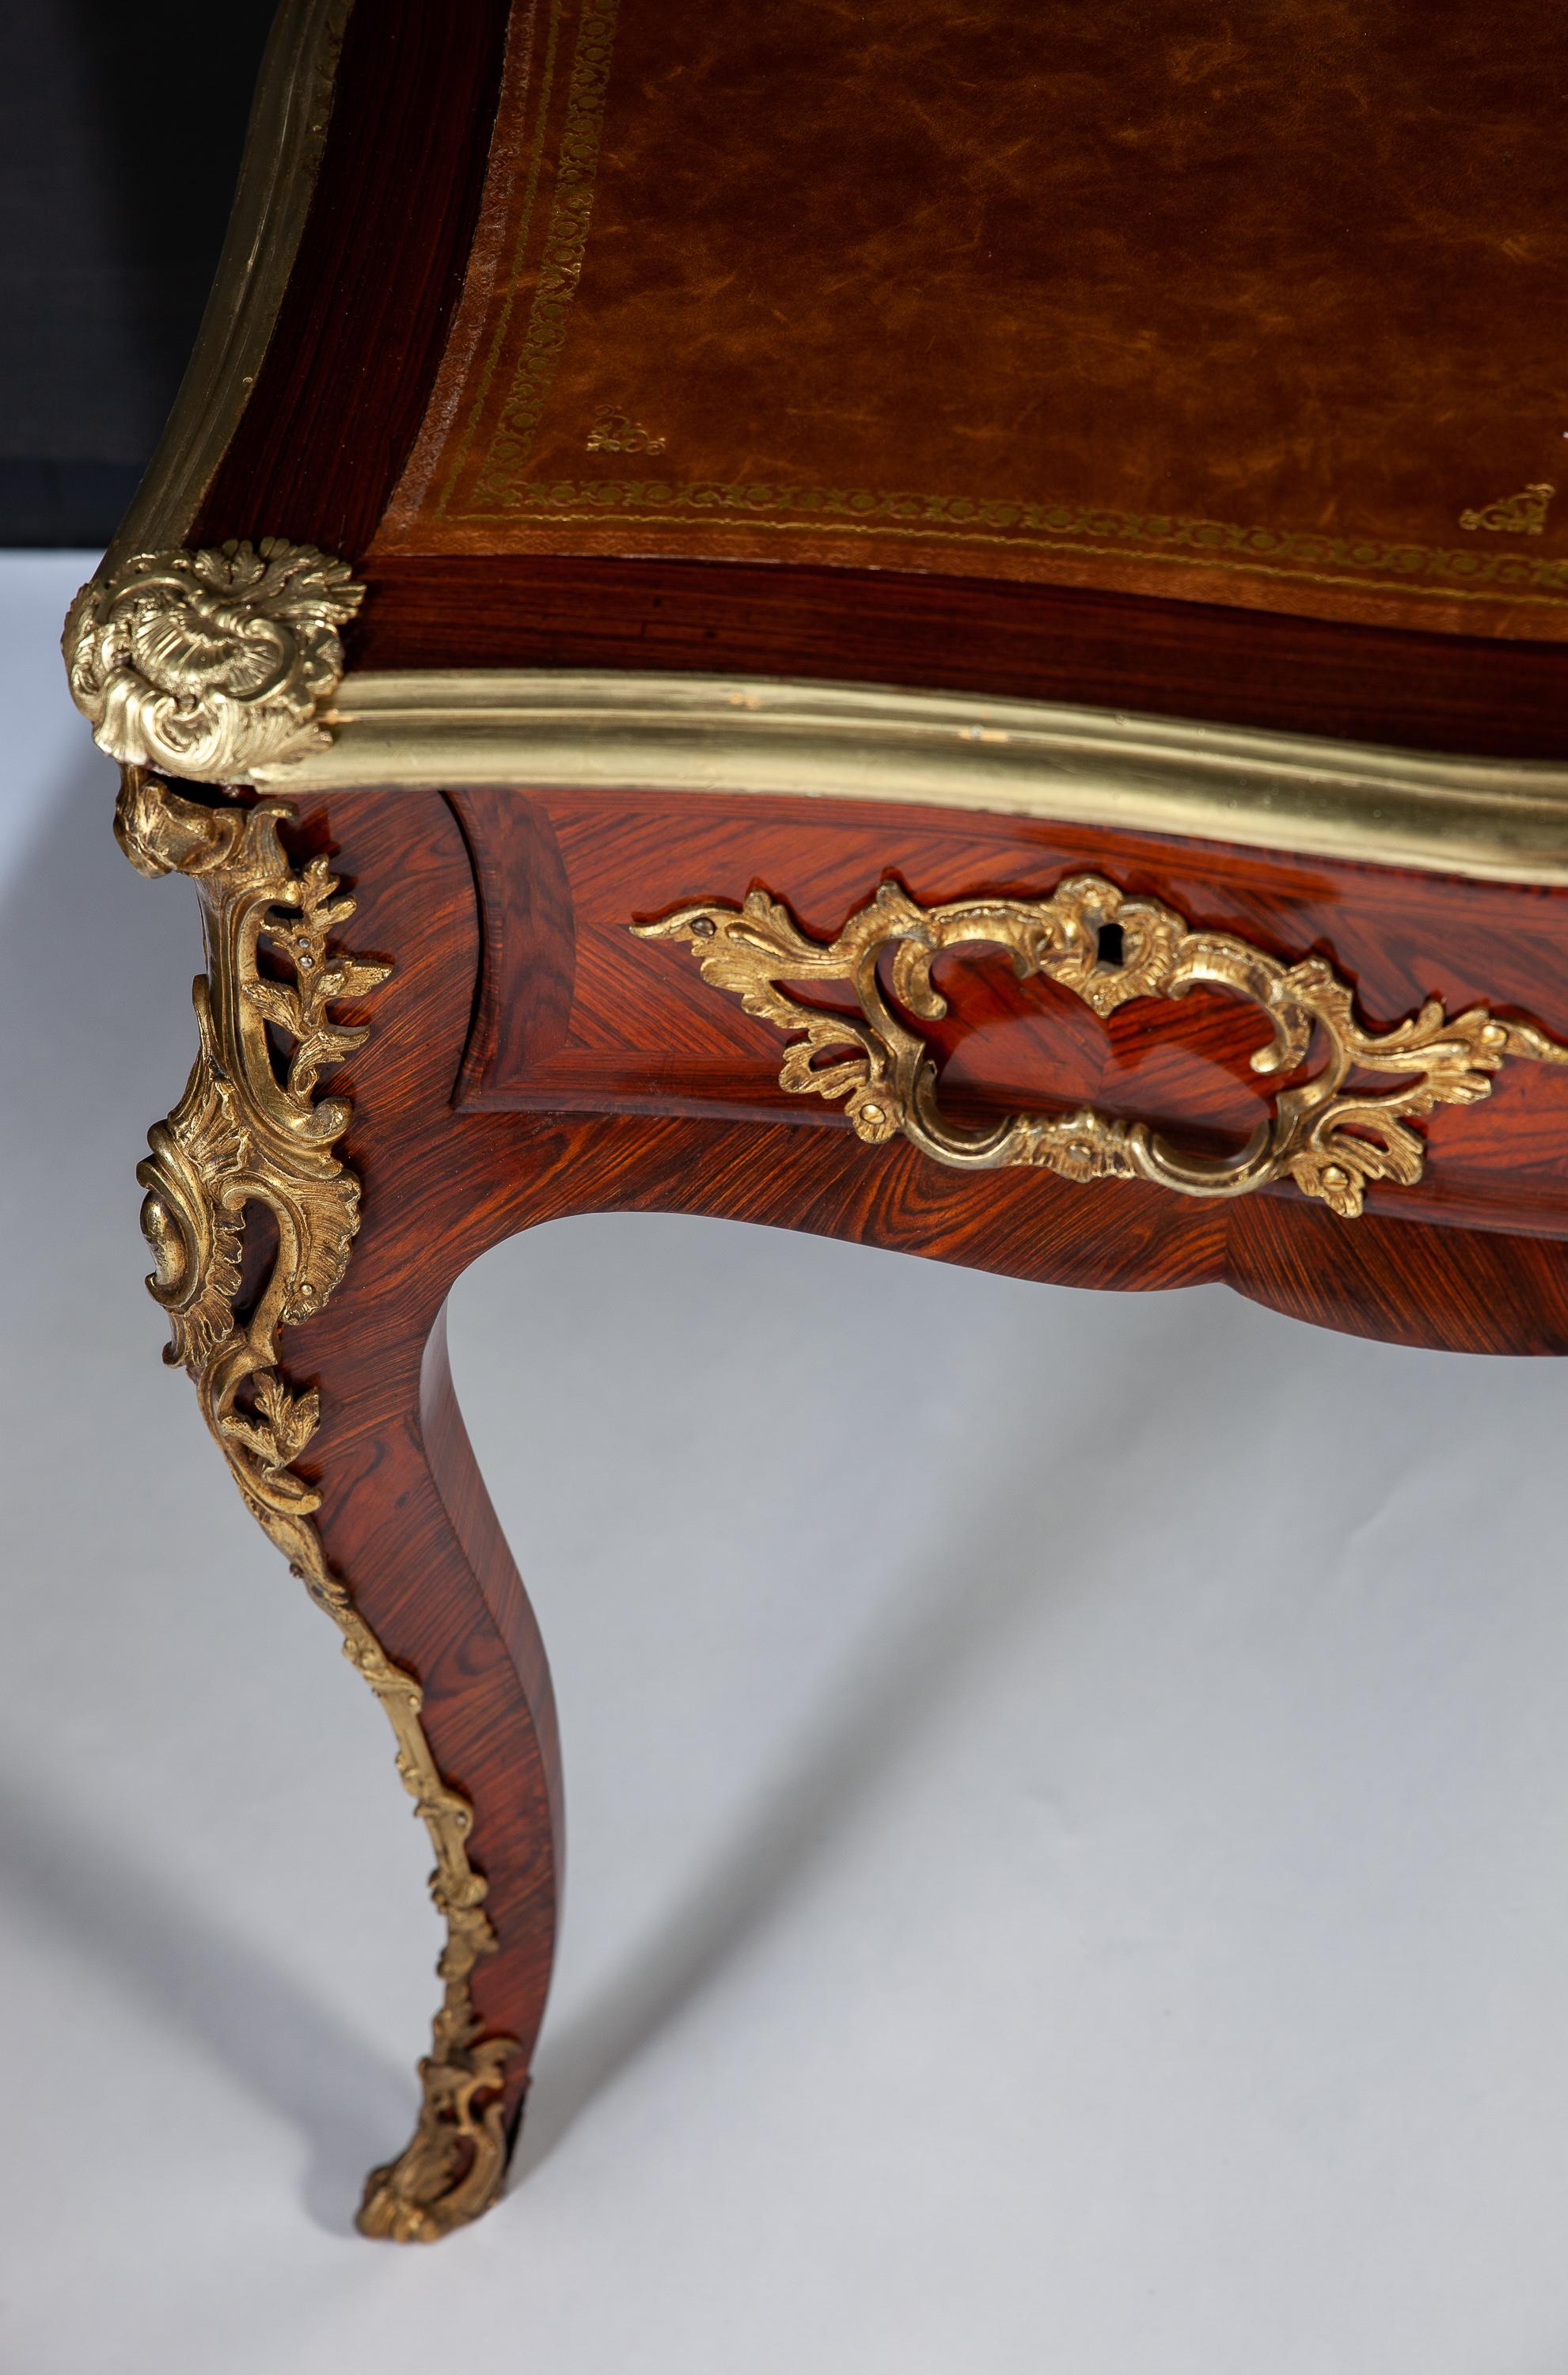 French 18th Century Louis XV Kingwood Gilt-Bronze Mounted  Bureau Plat Desk 1750 3